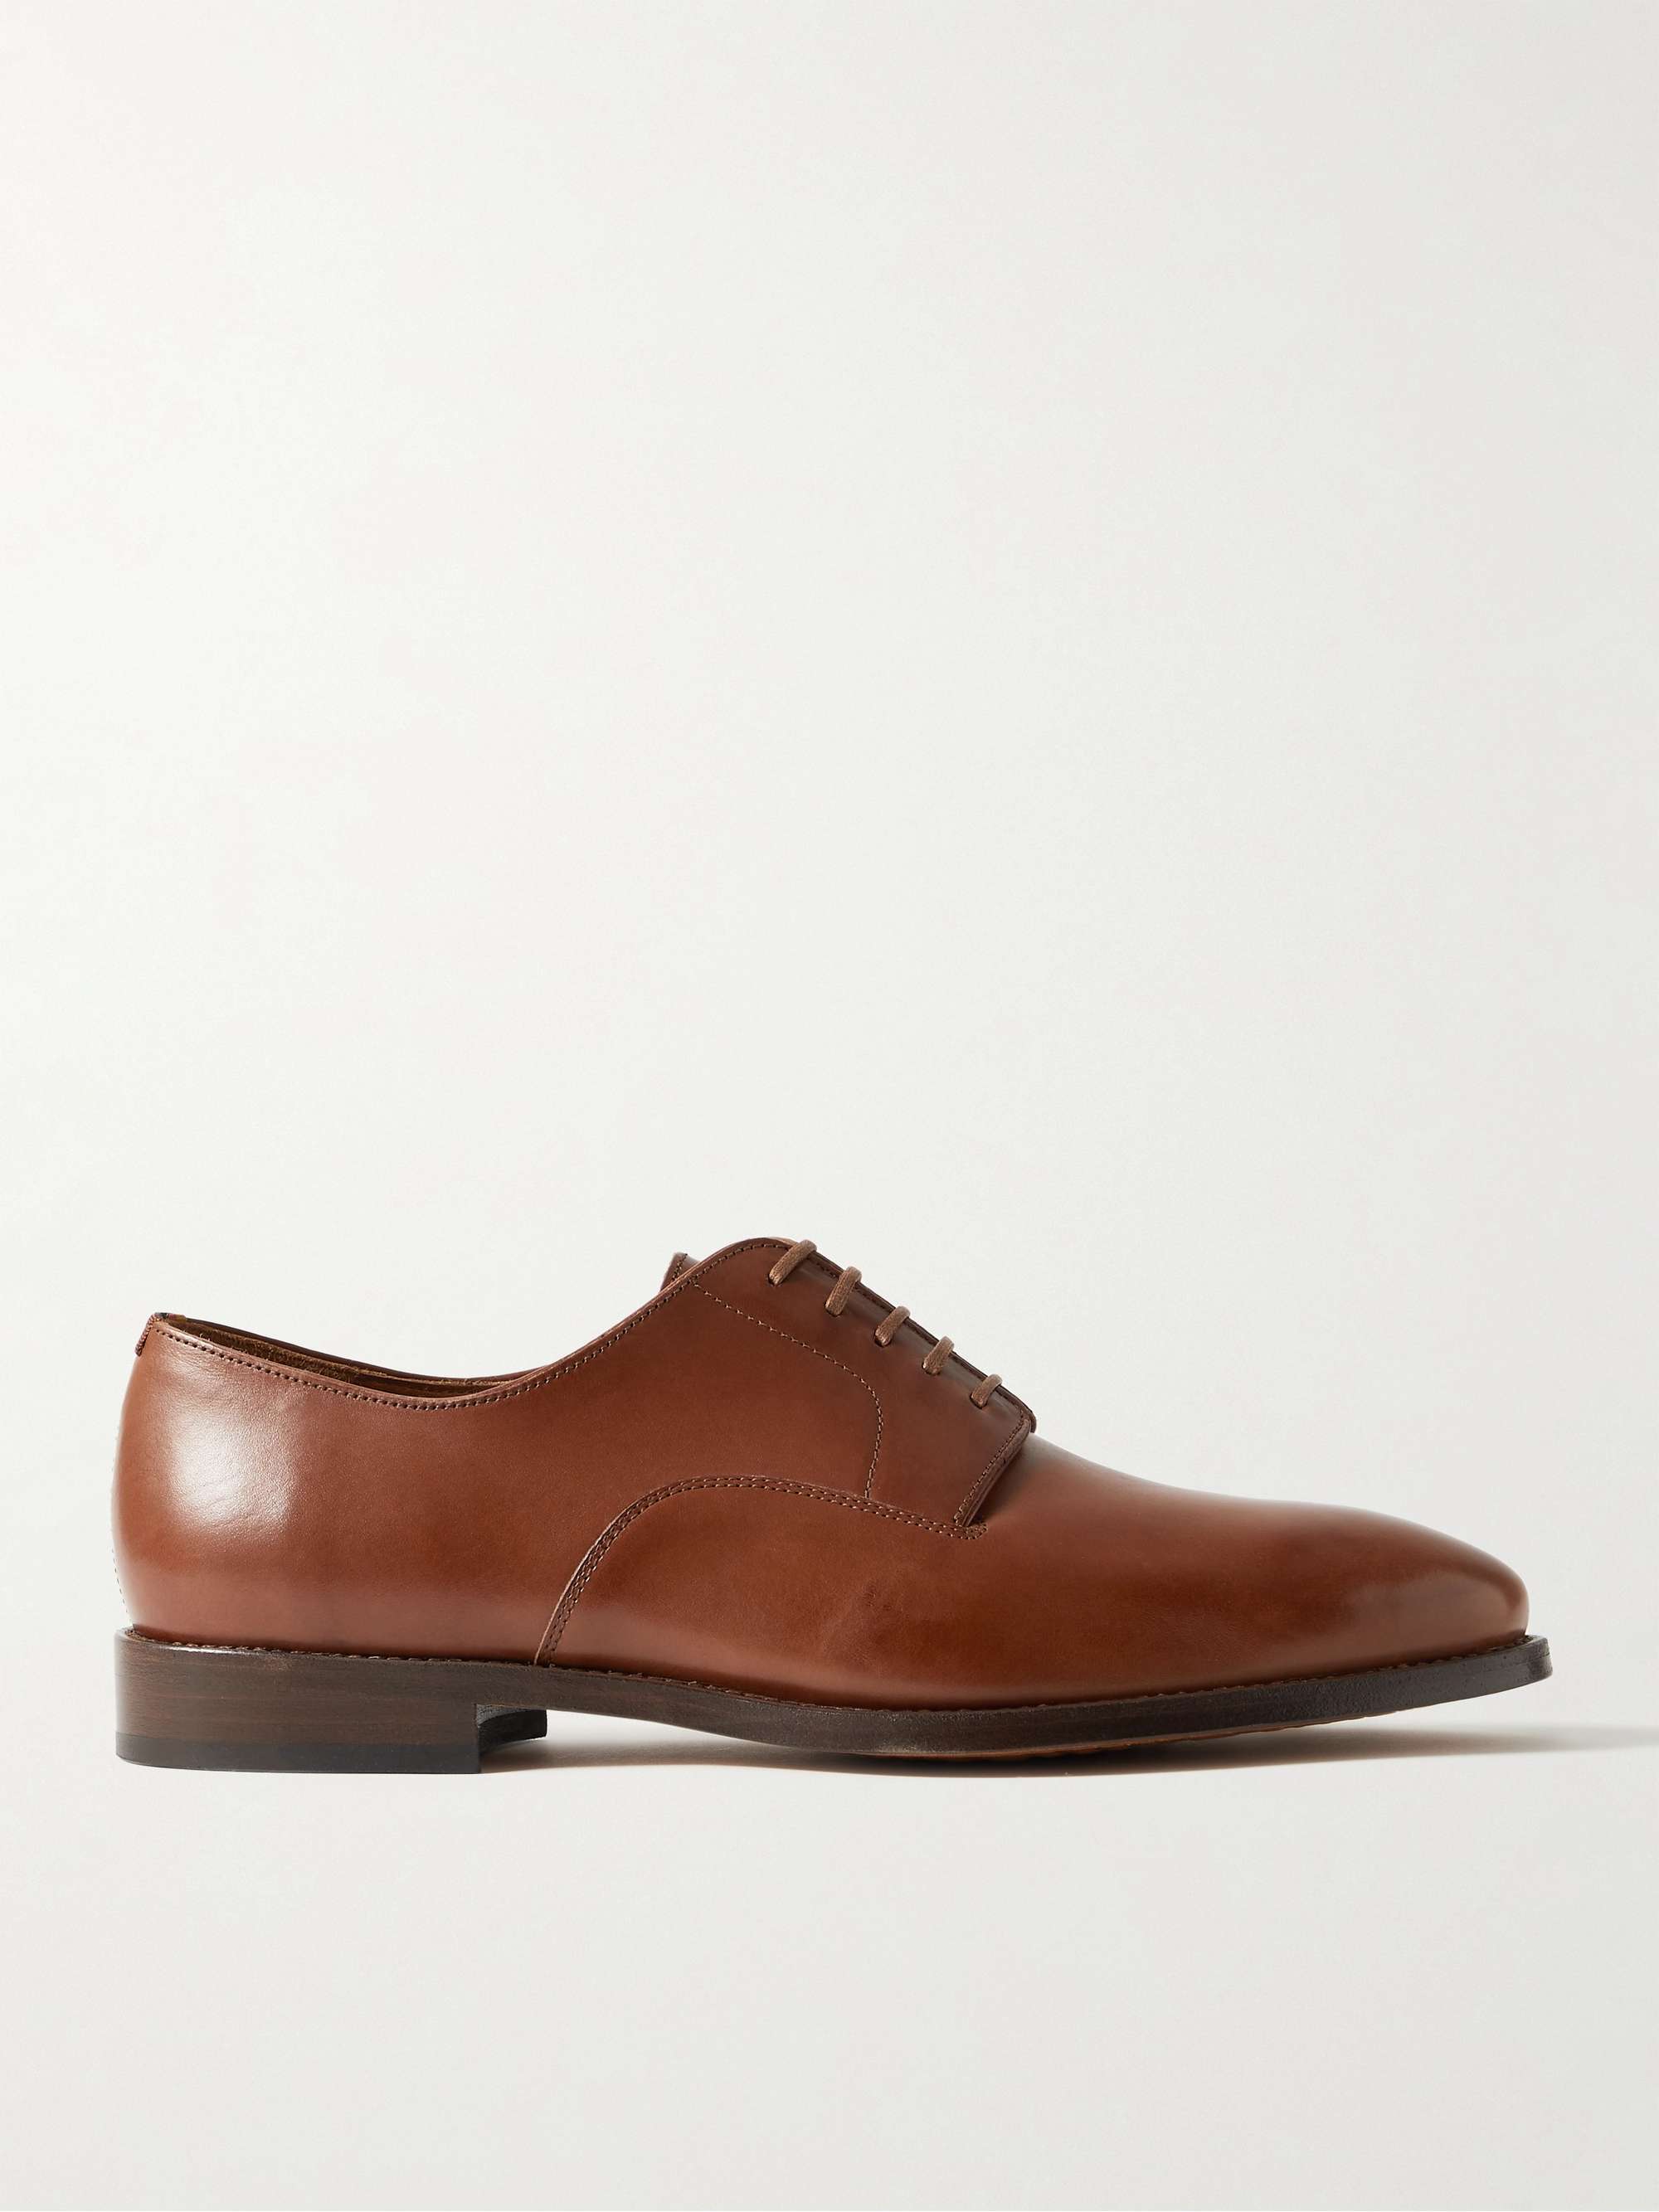 PAUL SMITH Fes Leather Derby Shoes for Men | MR PORTER